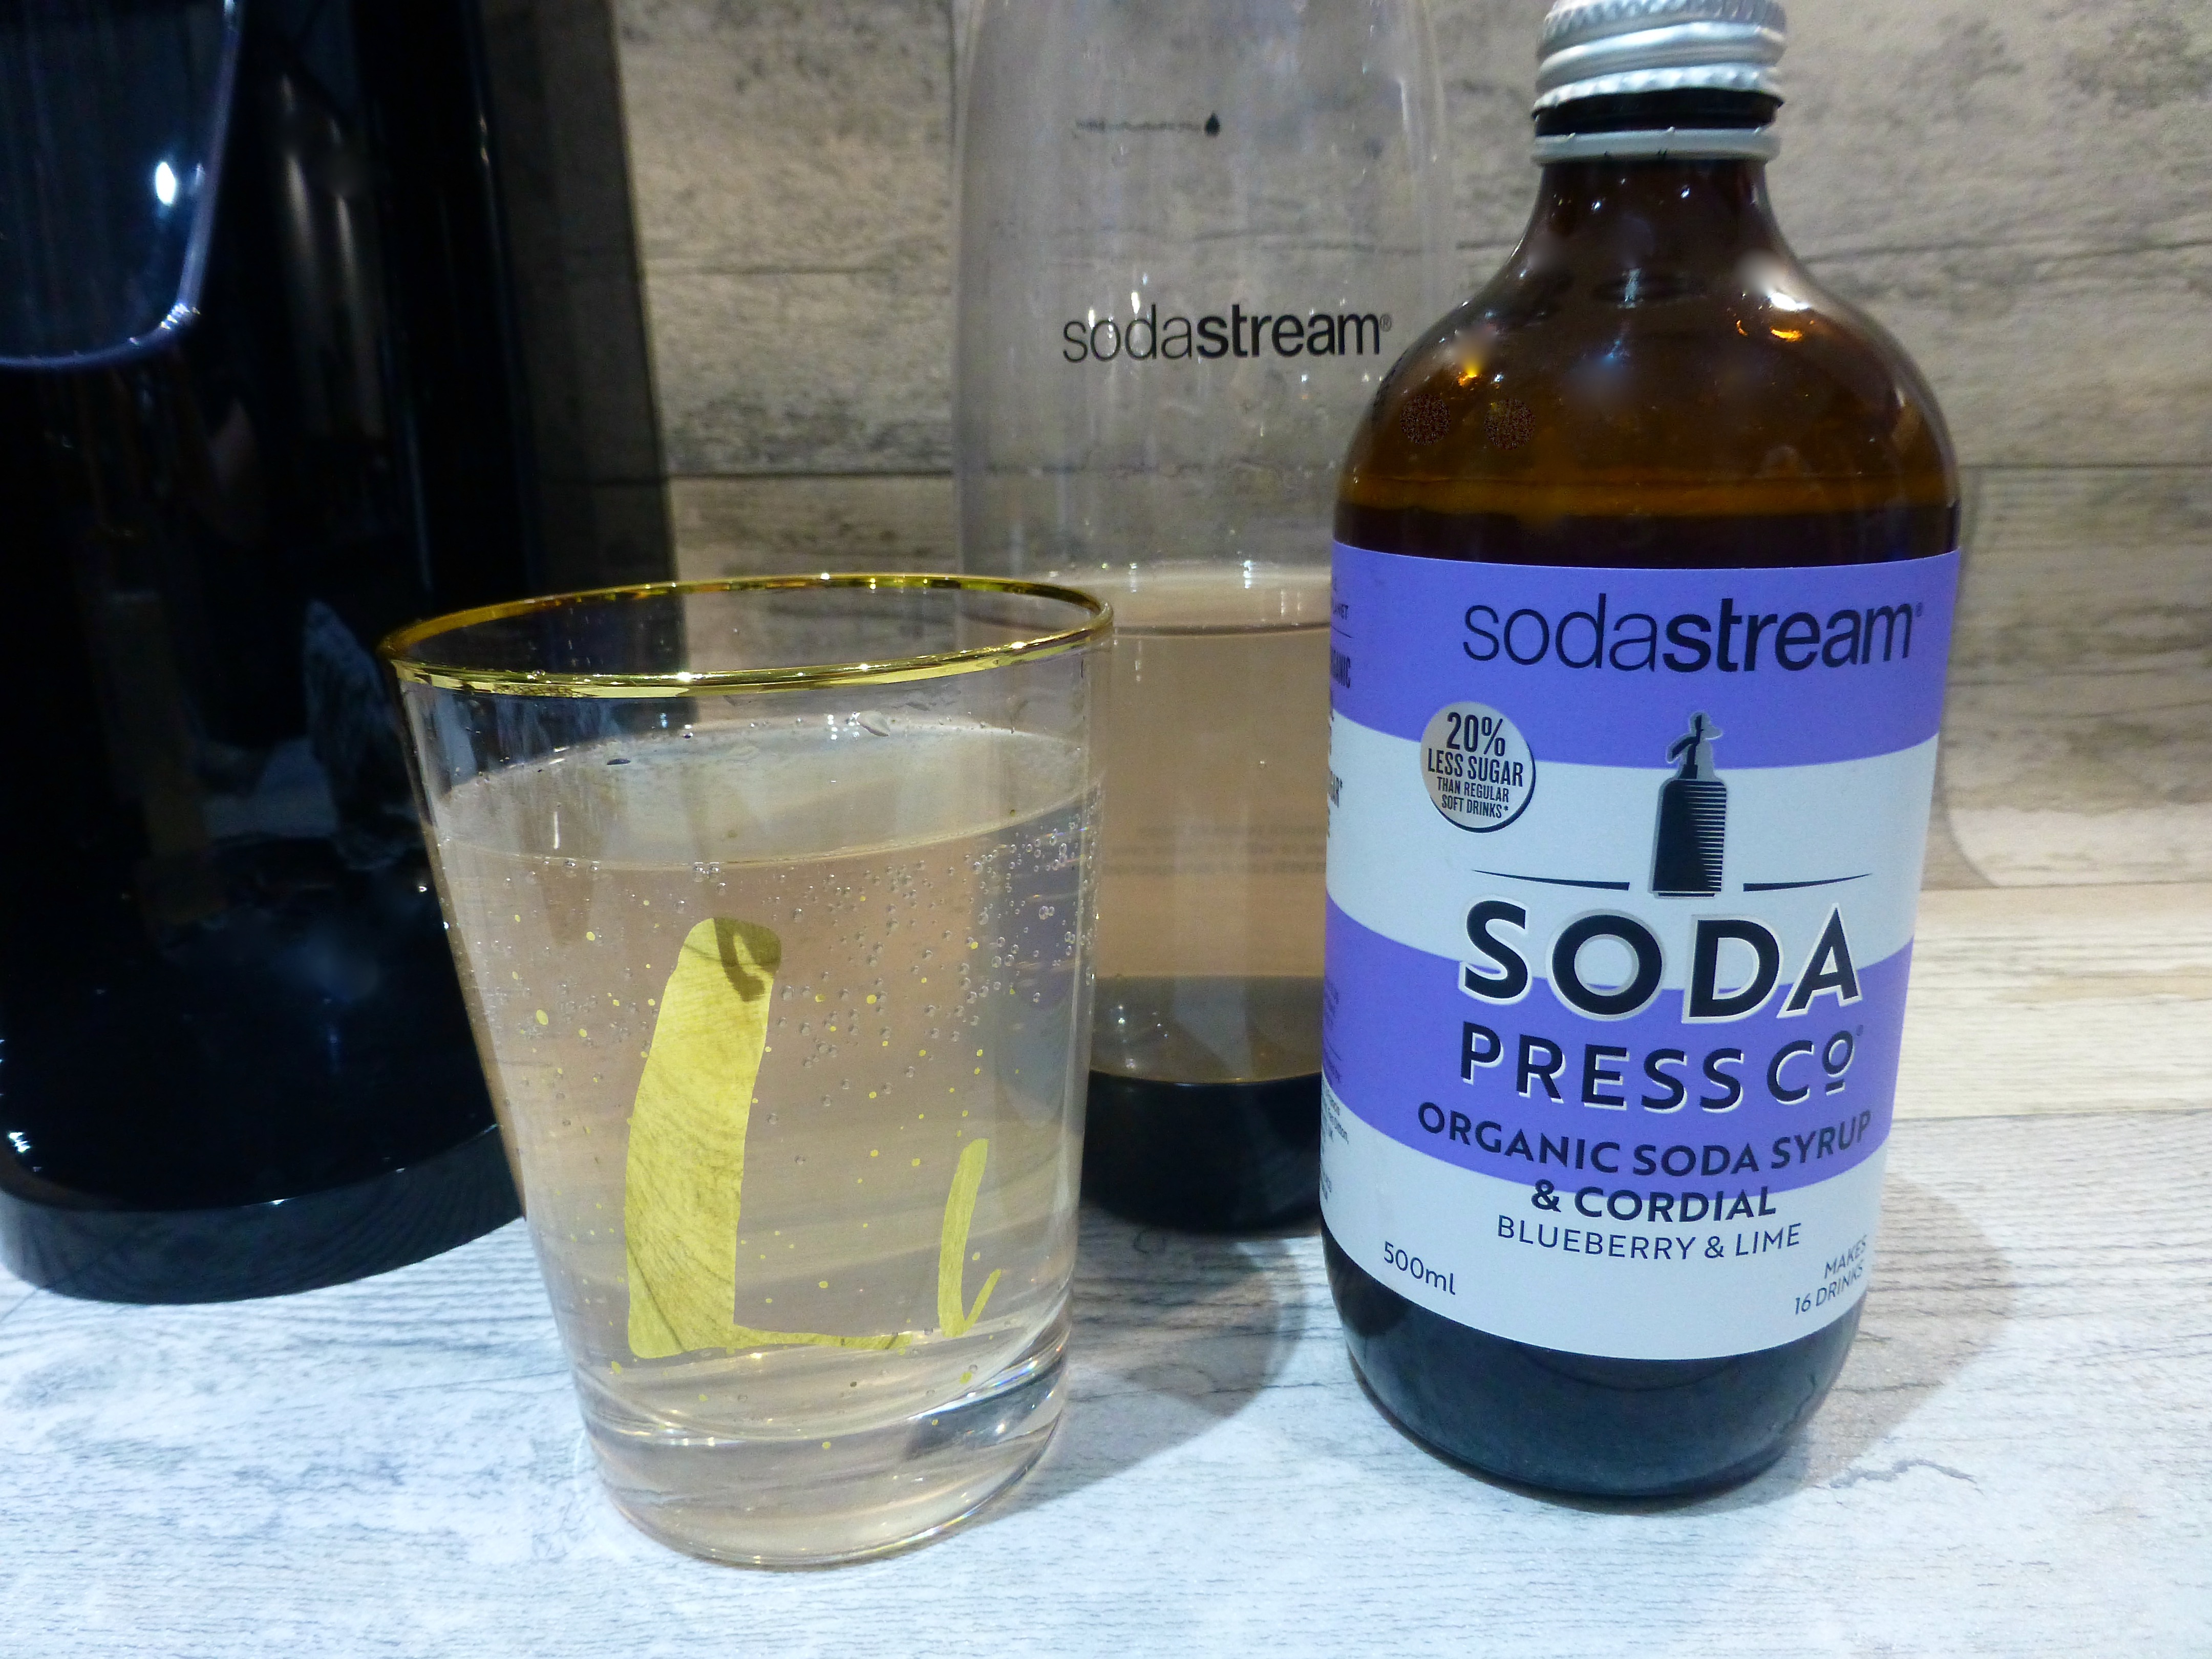 Sodastream Soda Press Co Blueberry and Lime